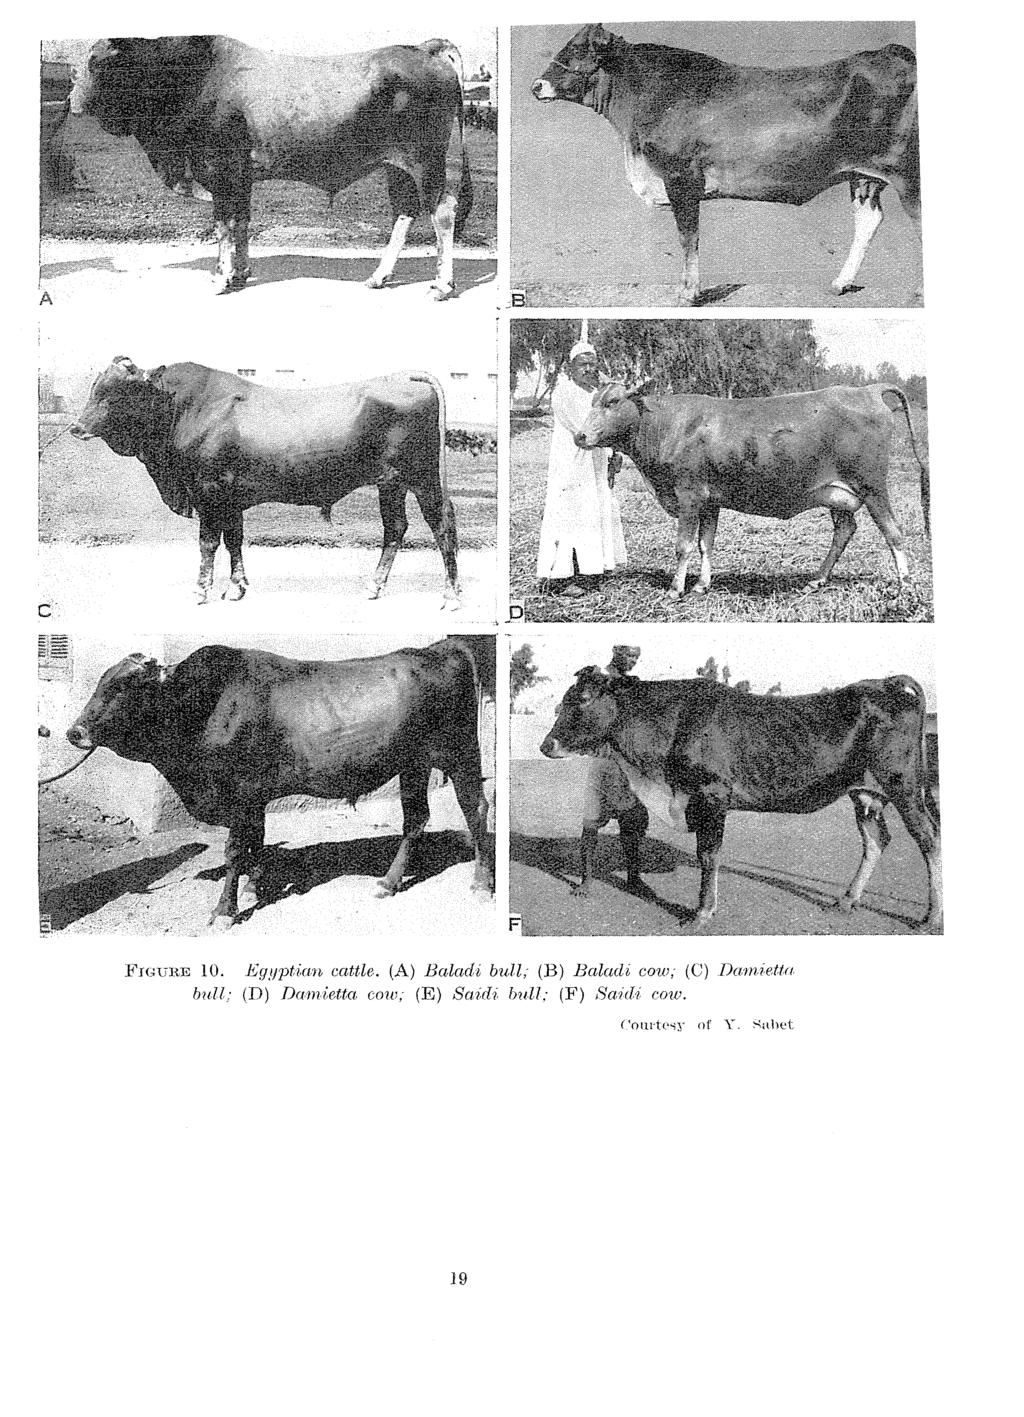 FIGURE 0. Egyptian cattle. (A) Baladi bull,.